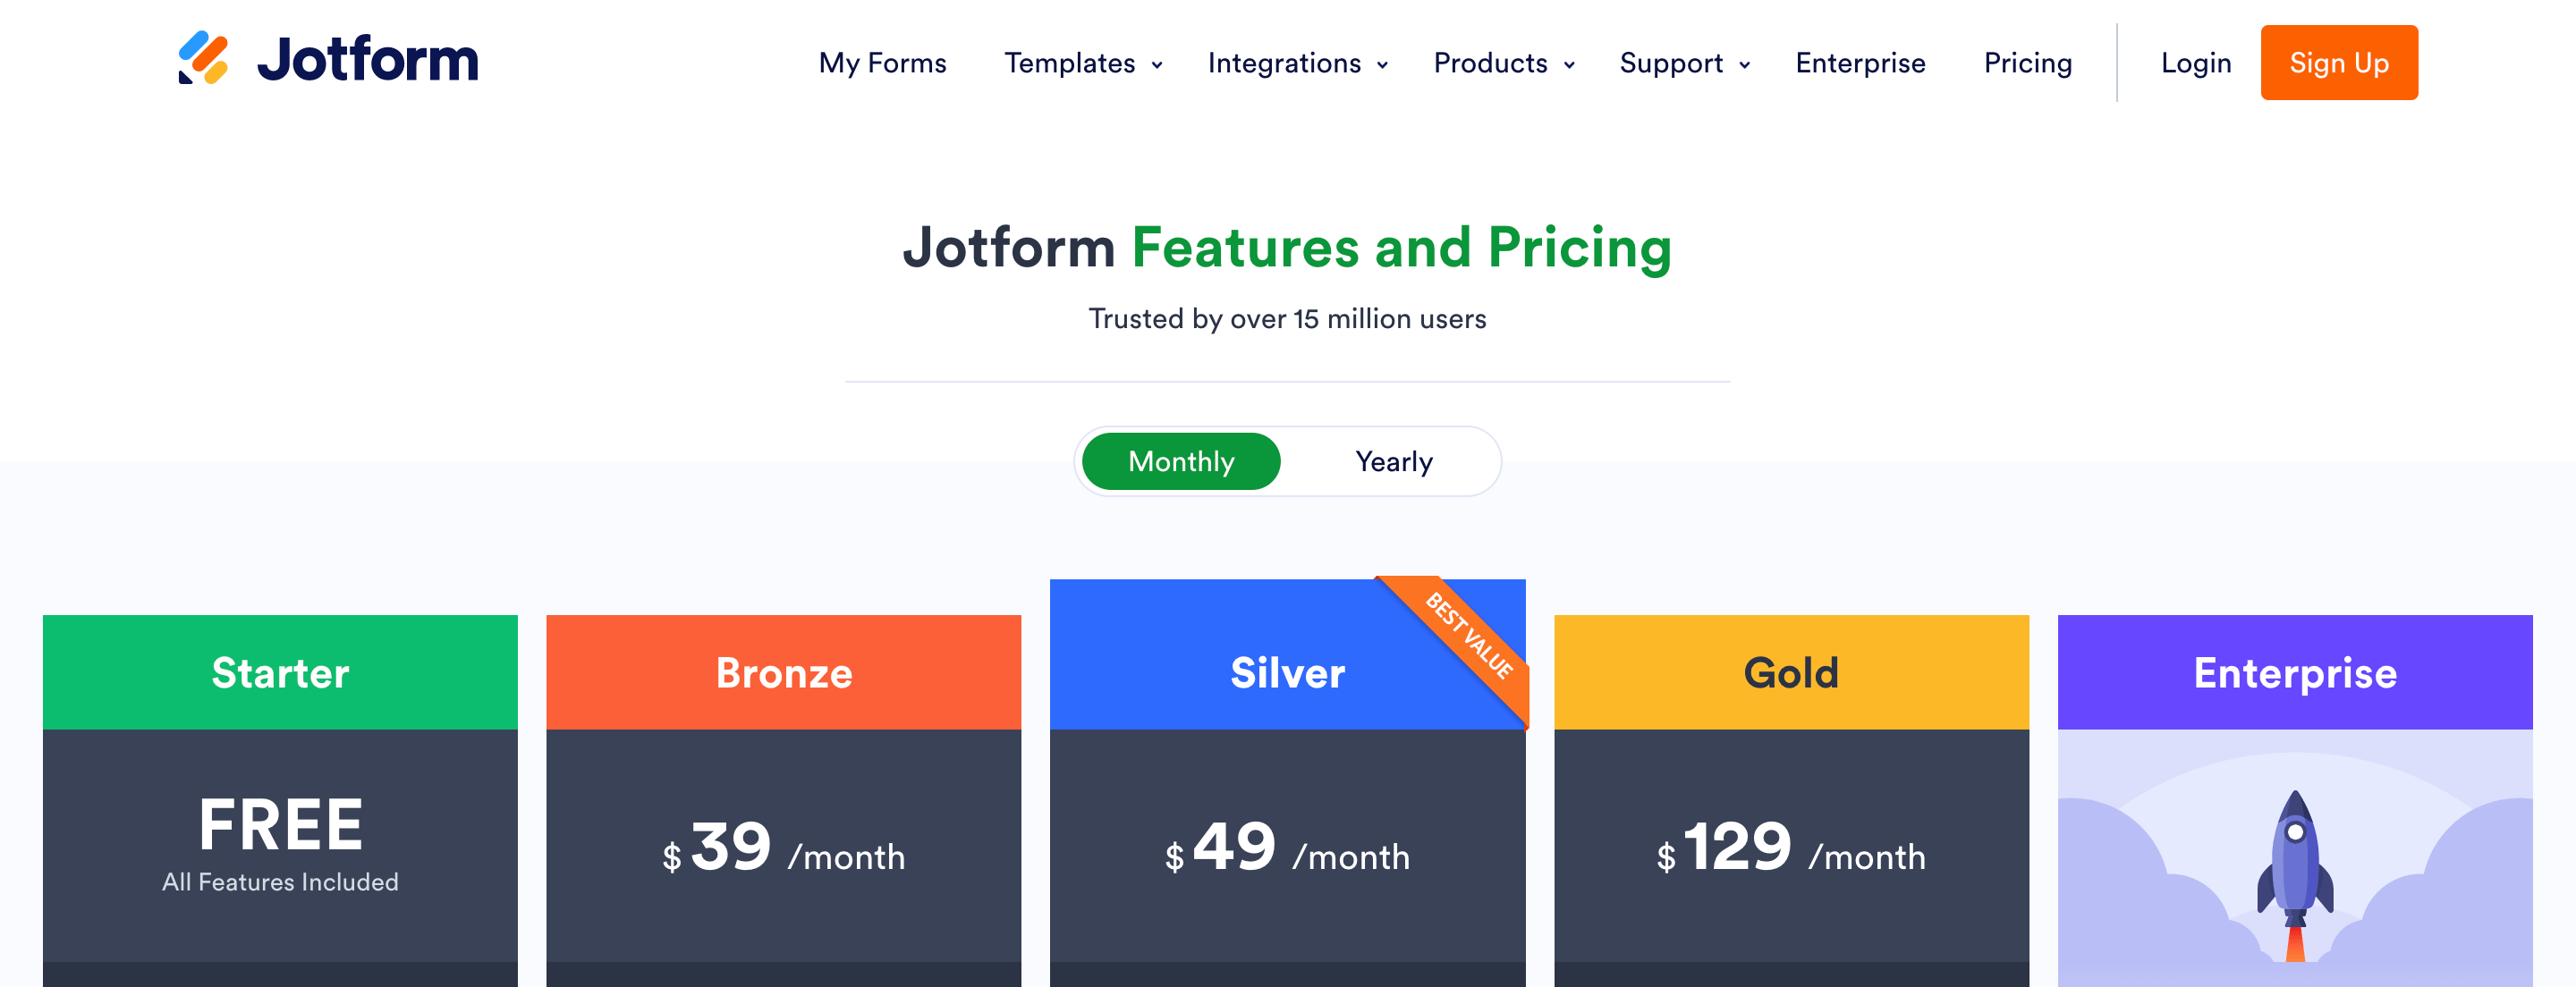 Jotform pricing